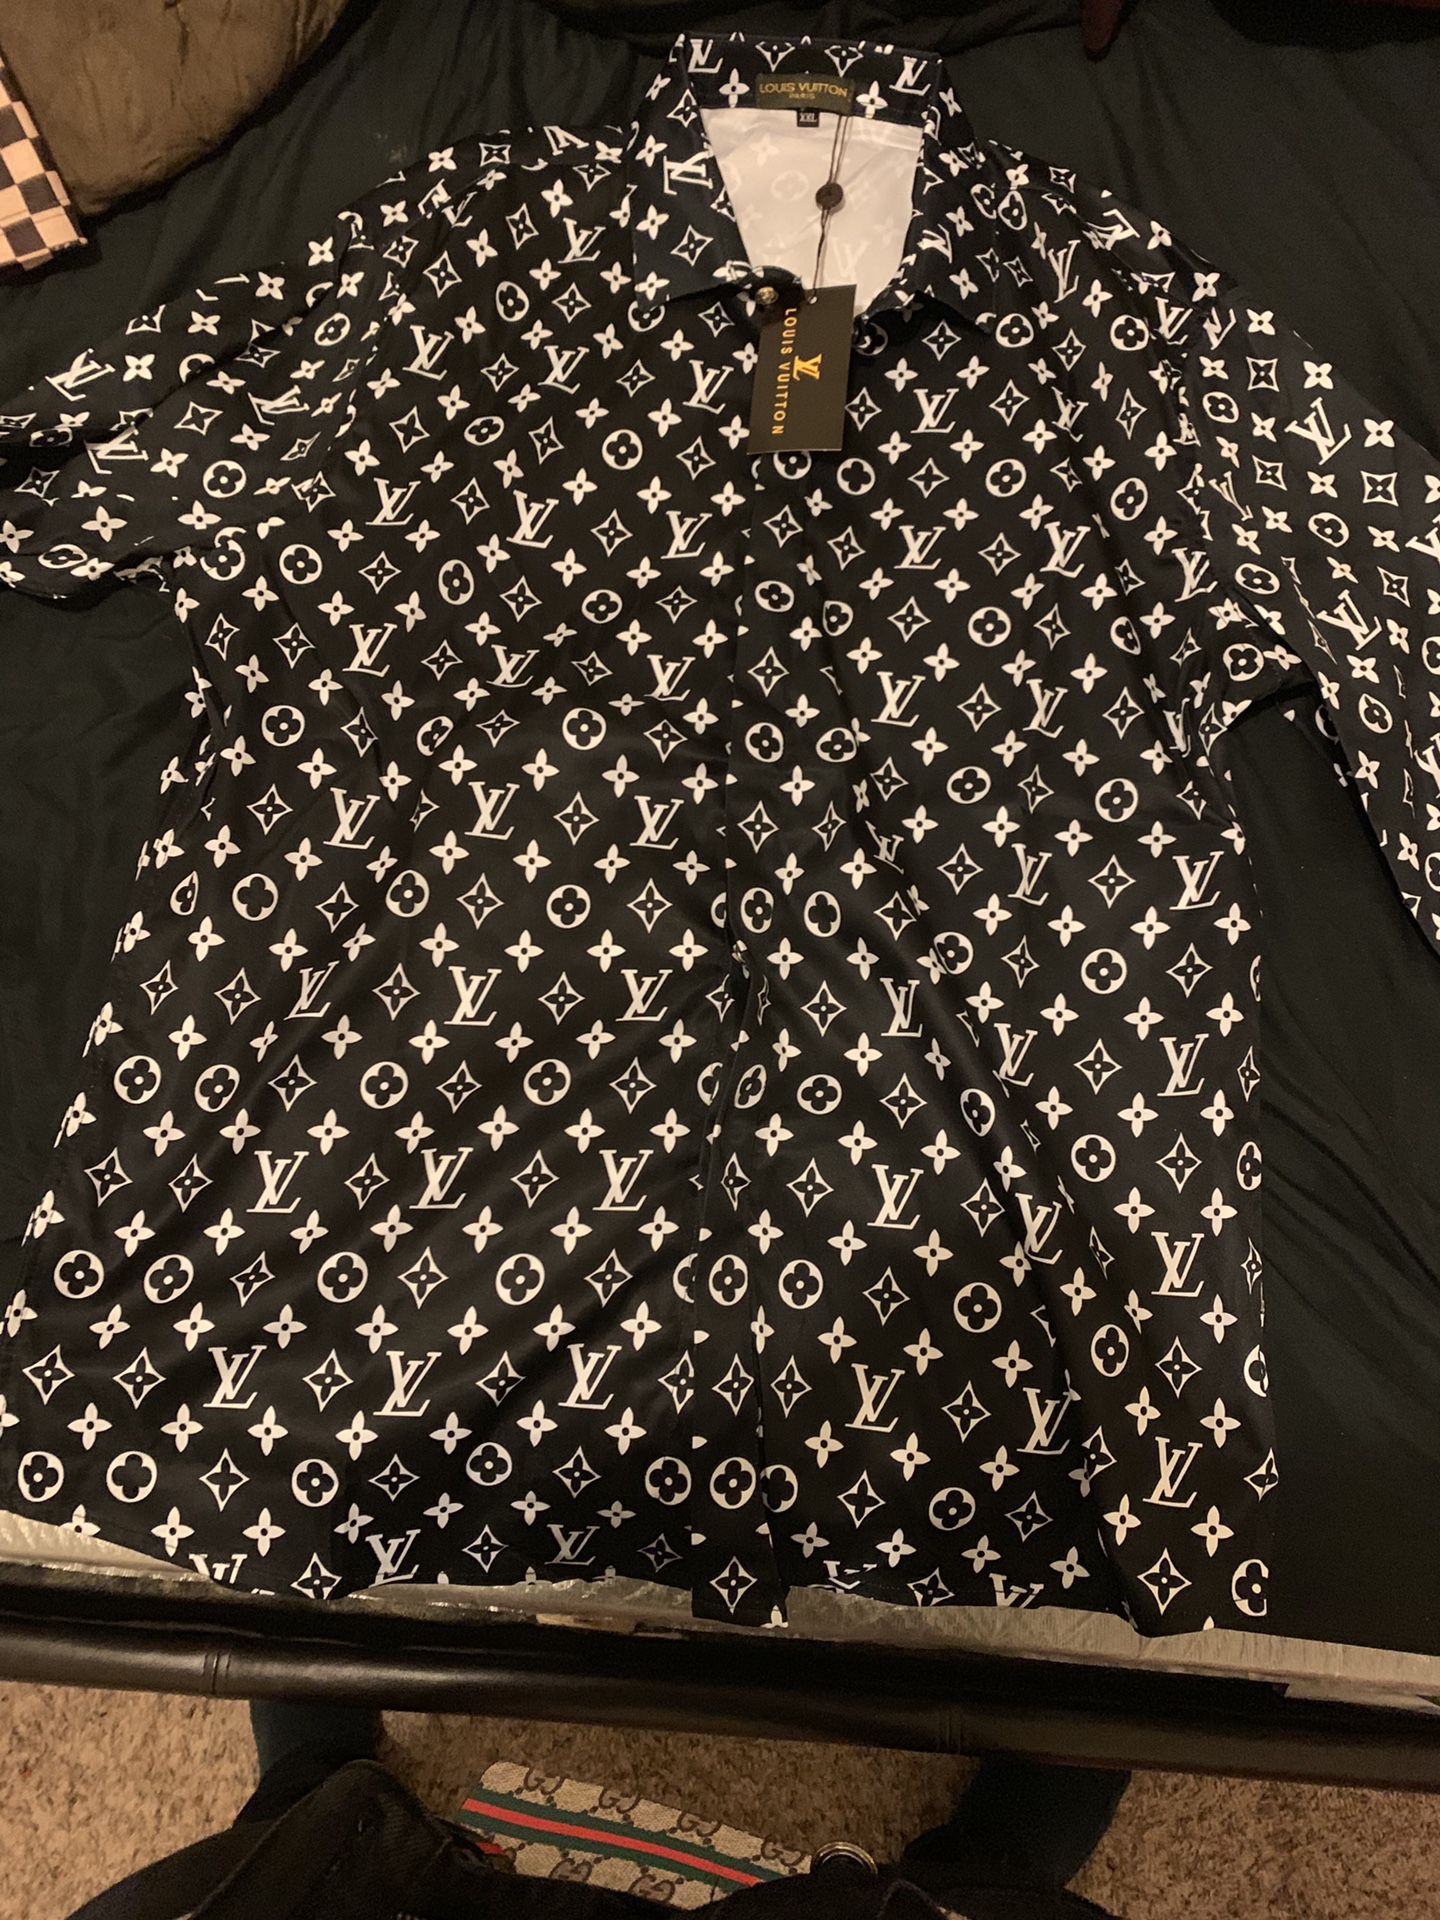 Louis Vuitton Shirt button down Black Sz L for Sale in Hialeah, FL